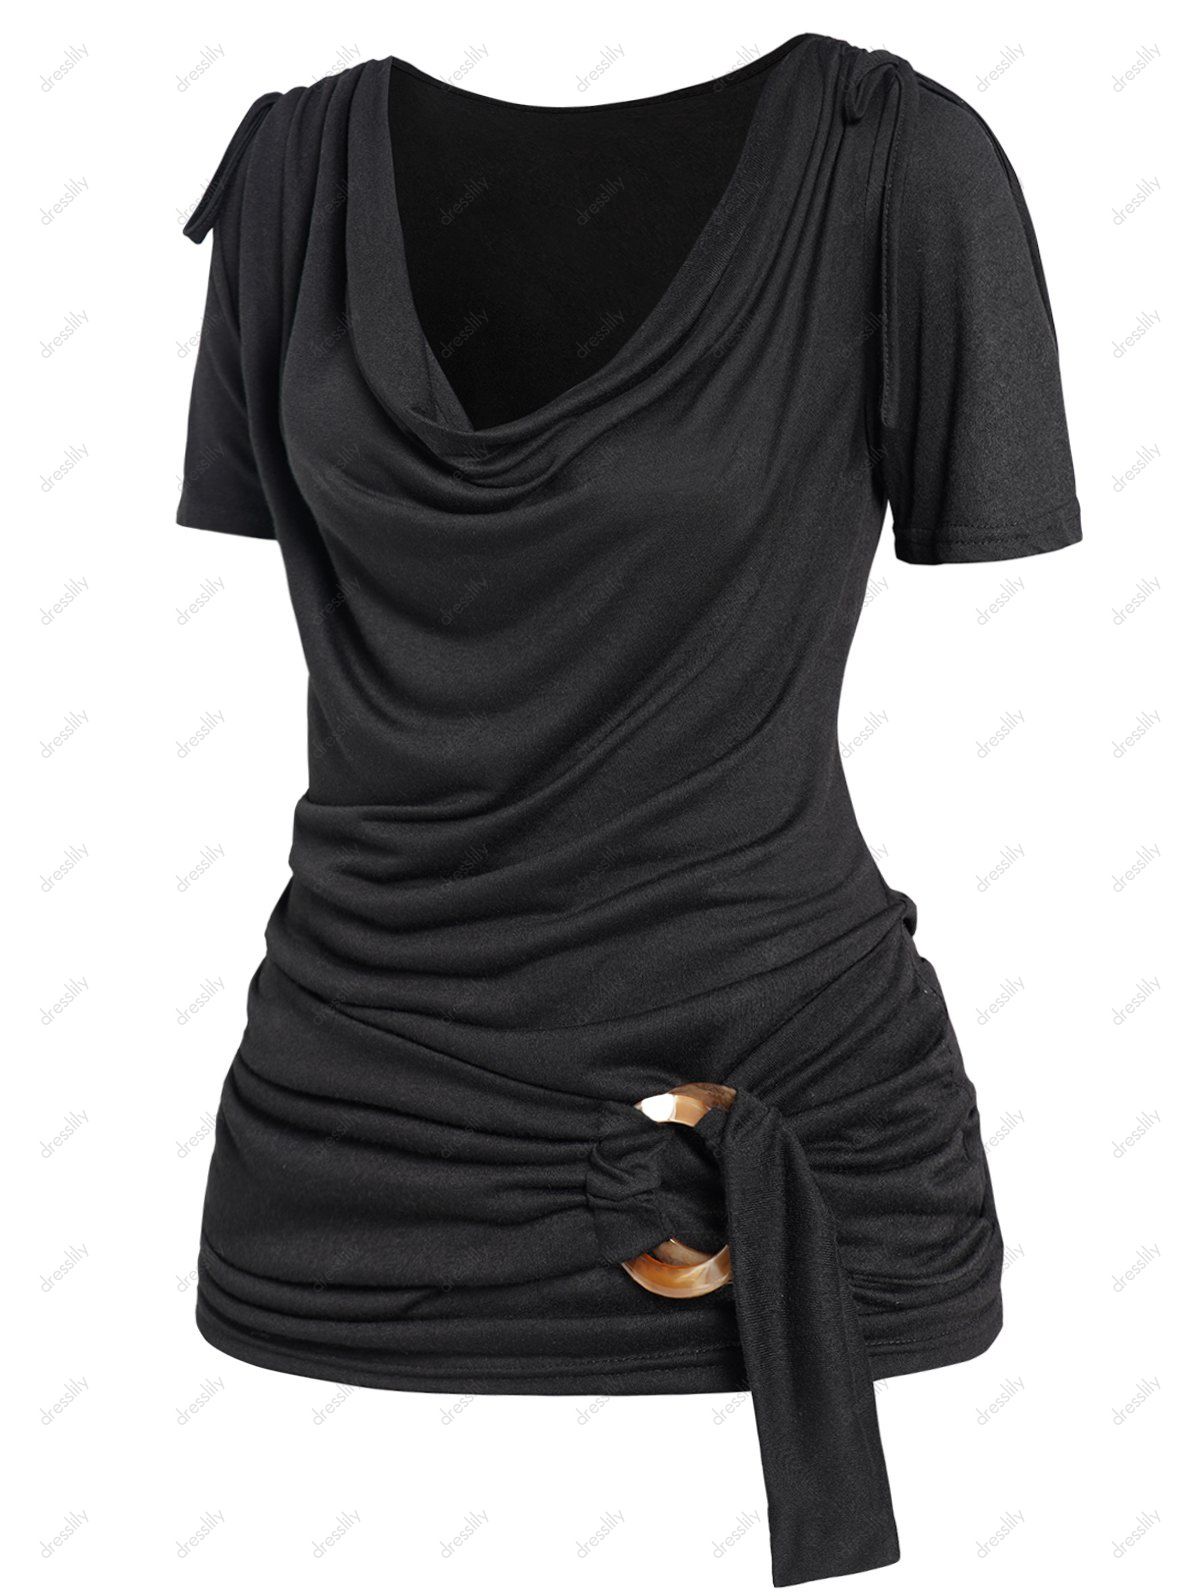 Dresslily Fashion Women Plus Size T Shirt Plain Color O Ring Cowl Neck Draped Short Sleeve Casual Tee Clothing 4x Black